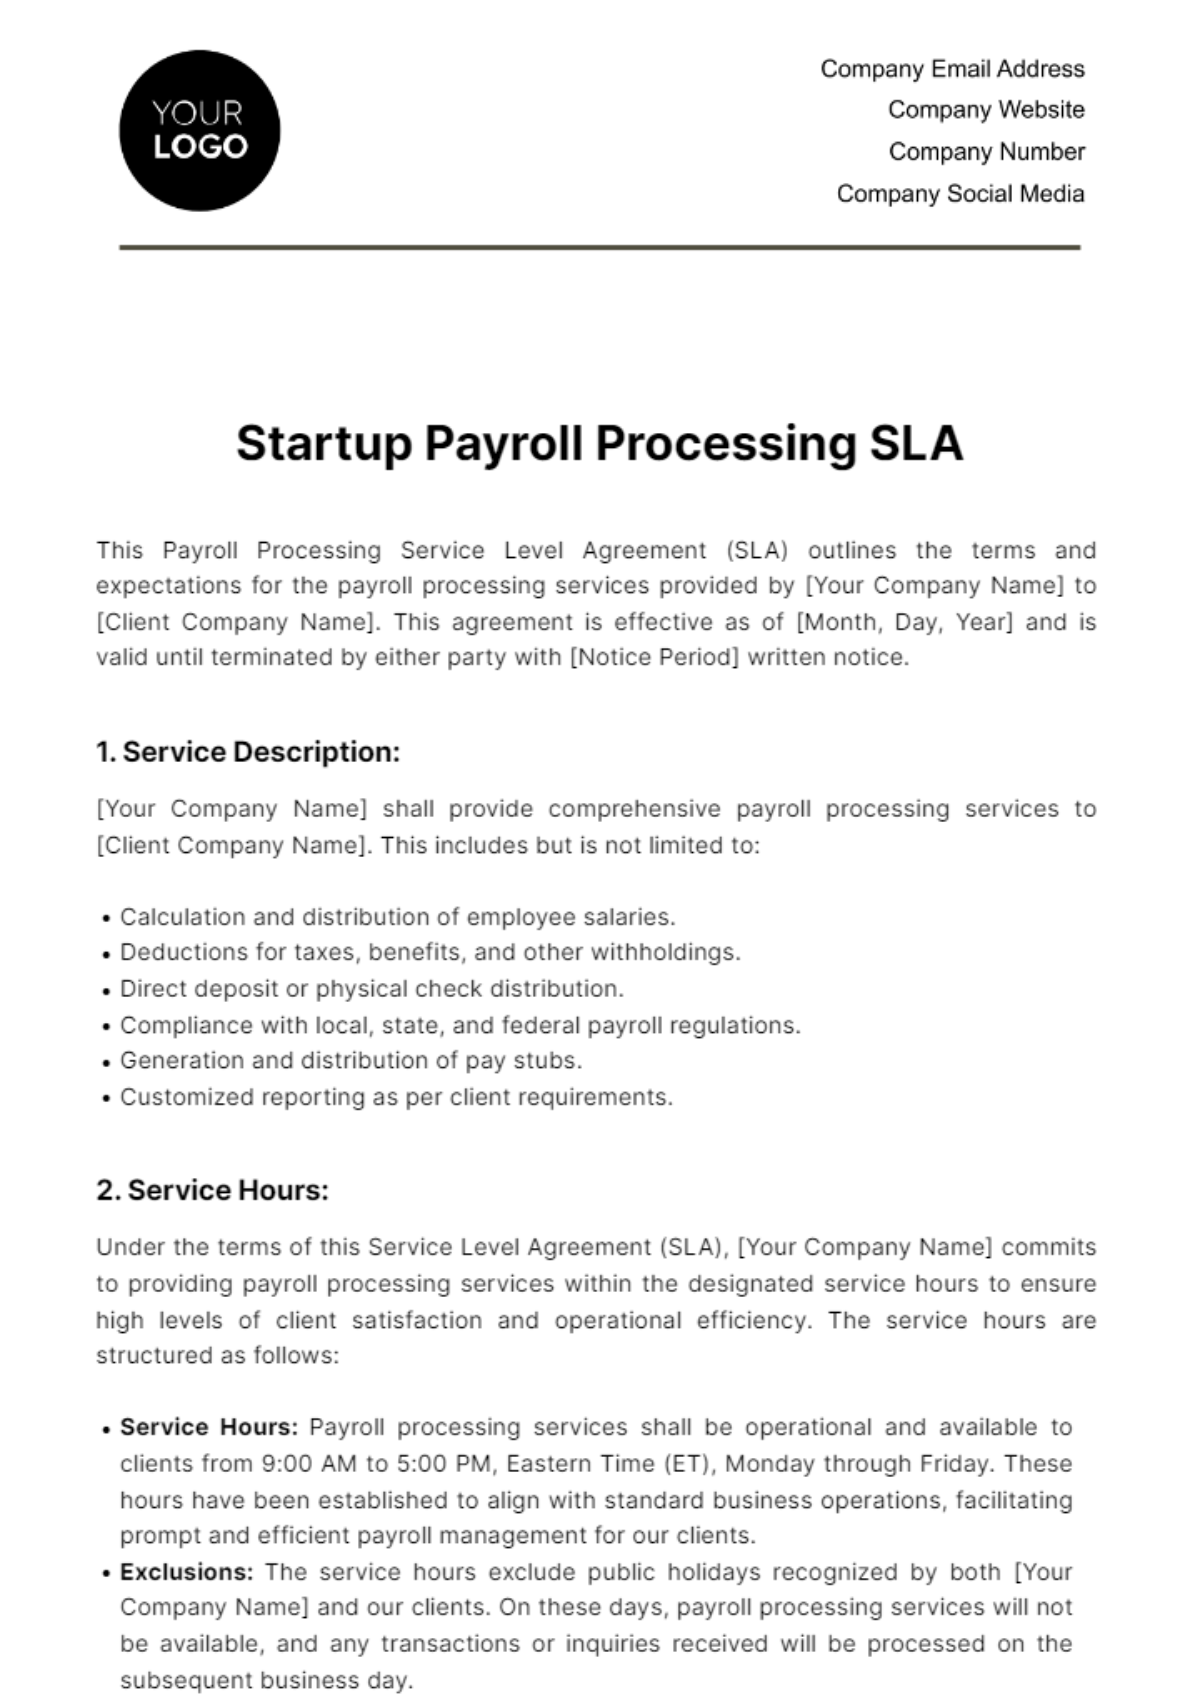 Startup Payroll Processing SLA Template